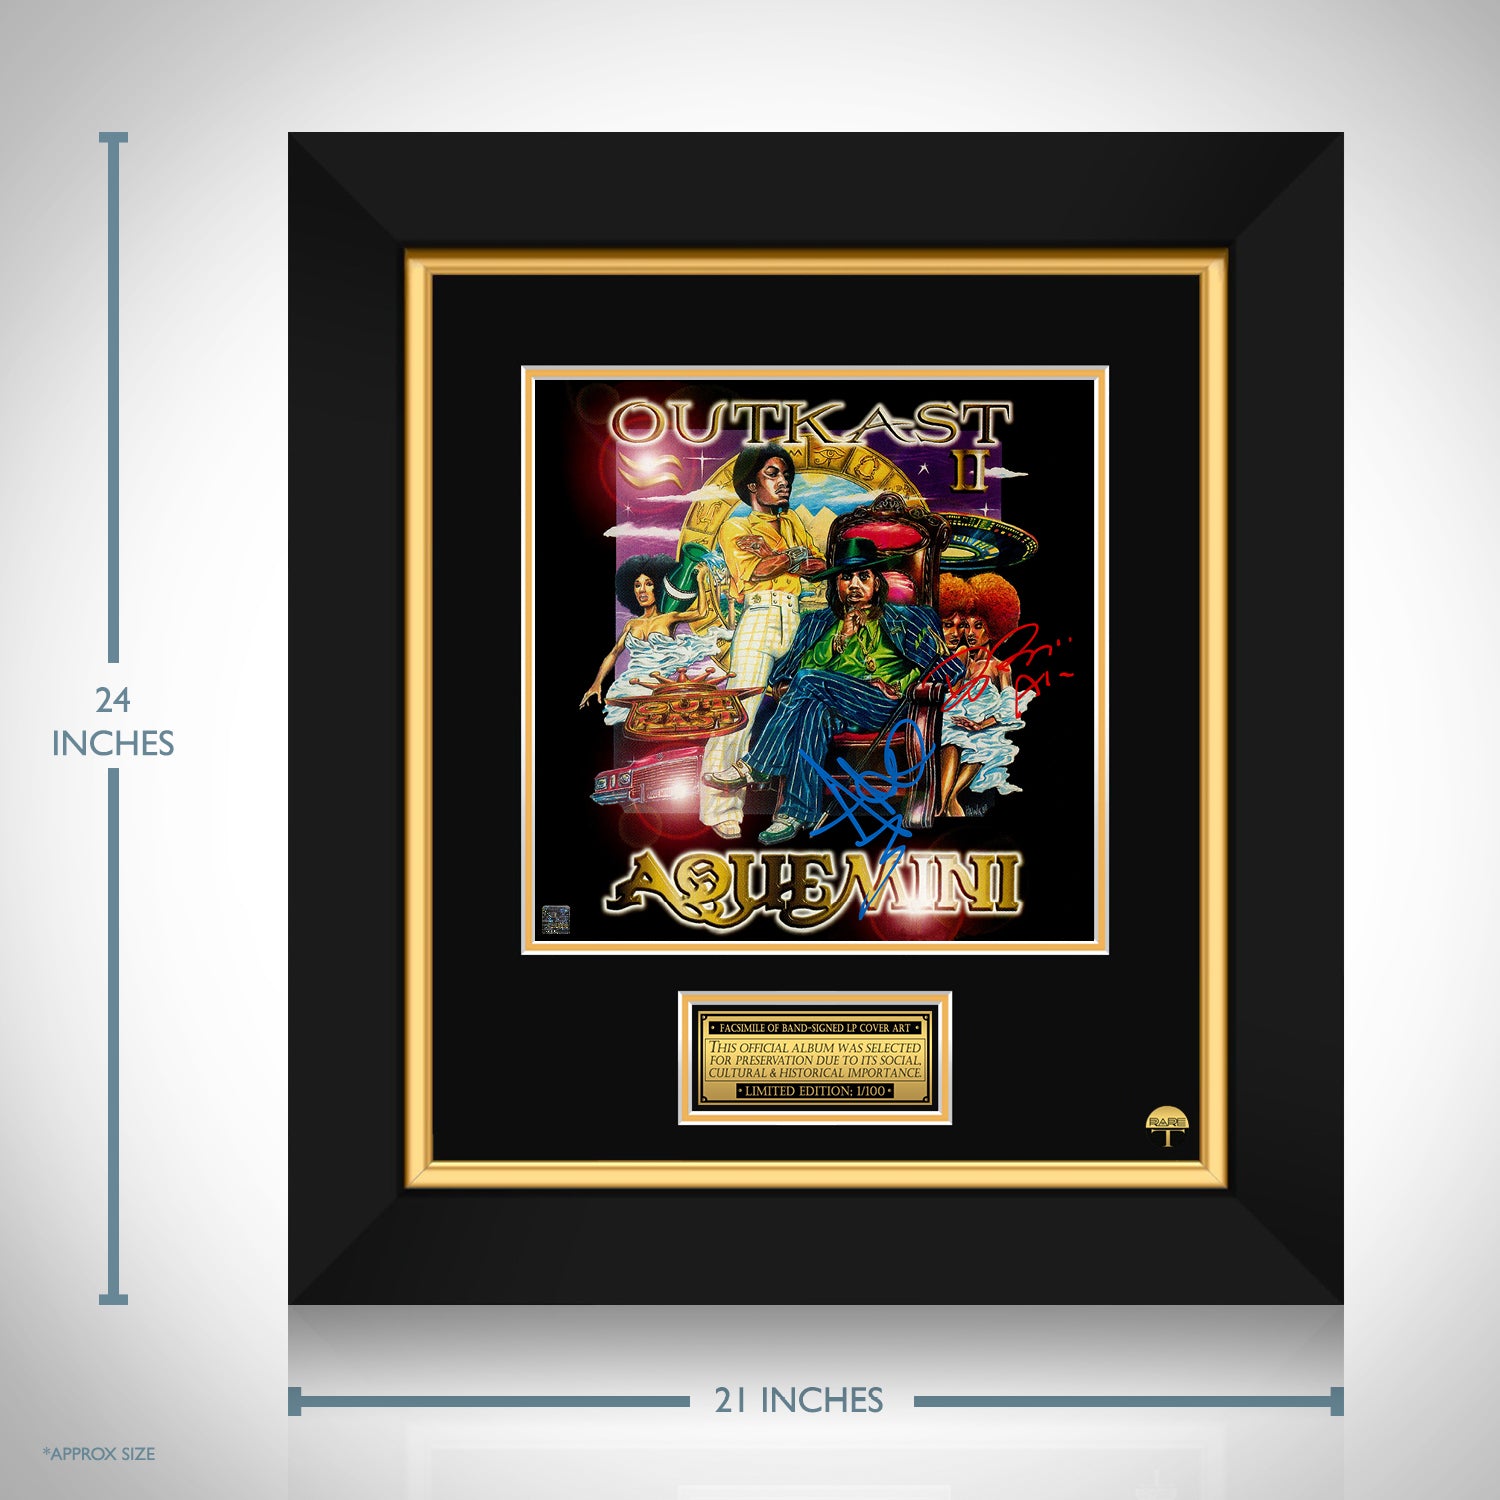 Outkast - Aquemini LP Cover Limited Signature Edition Custom Frame 